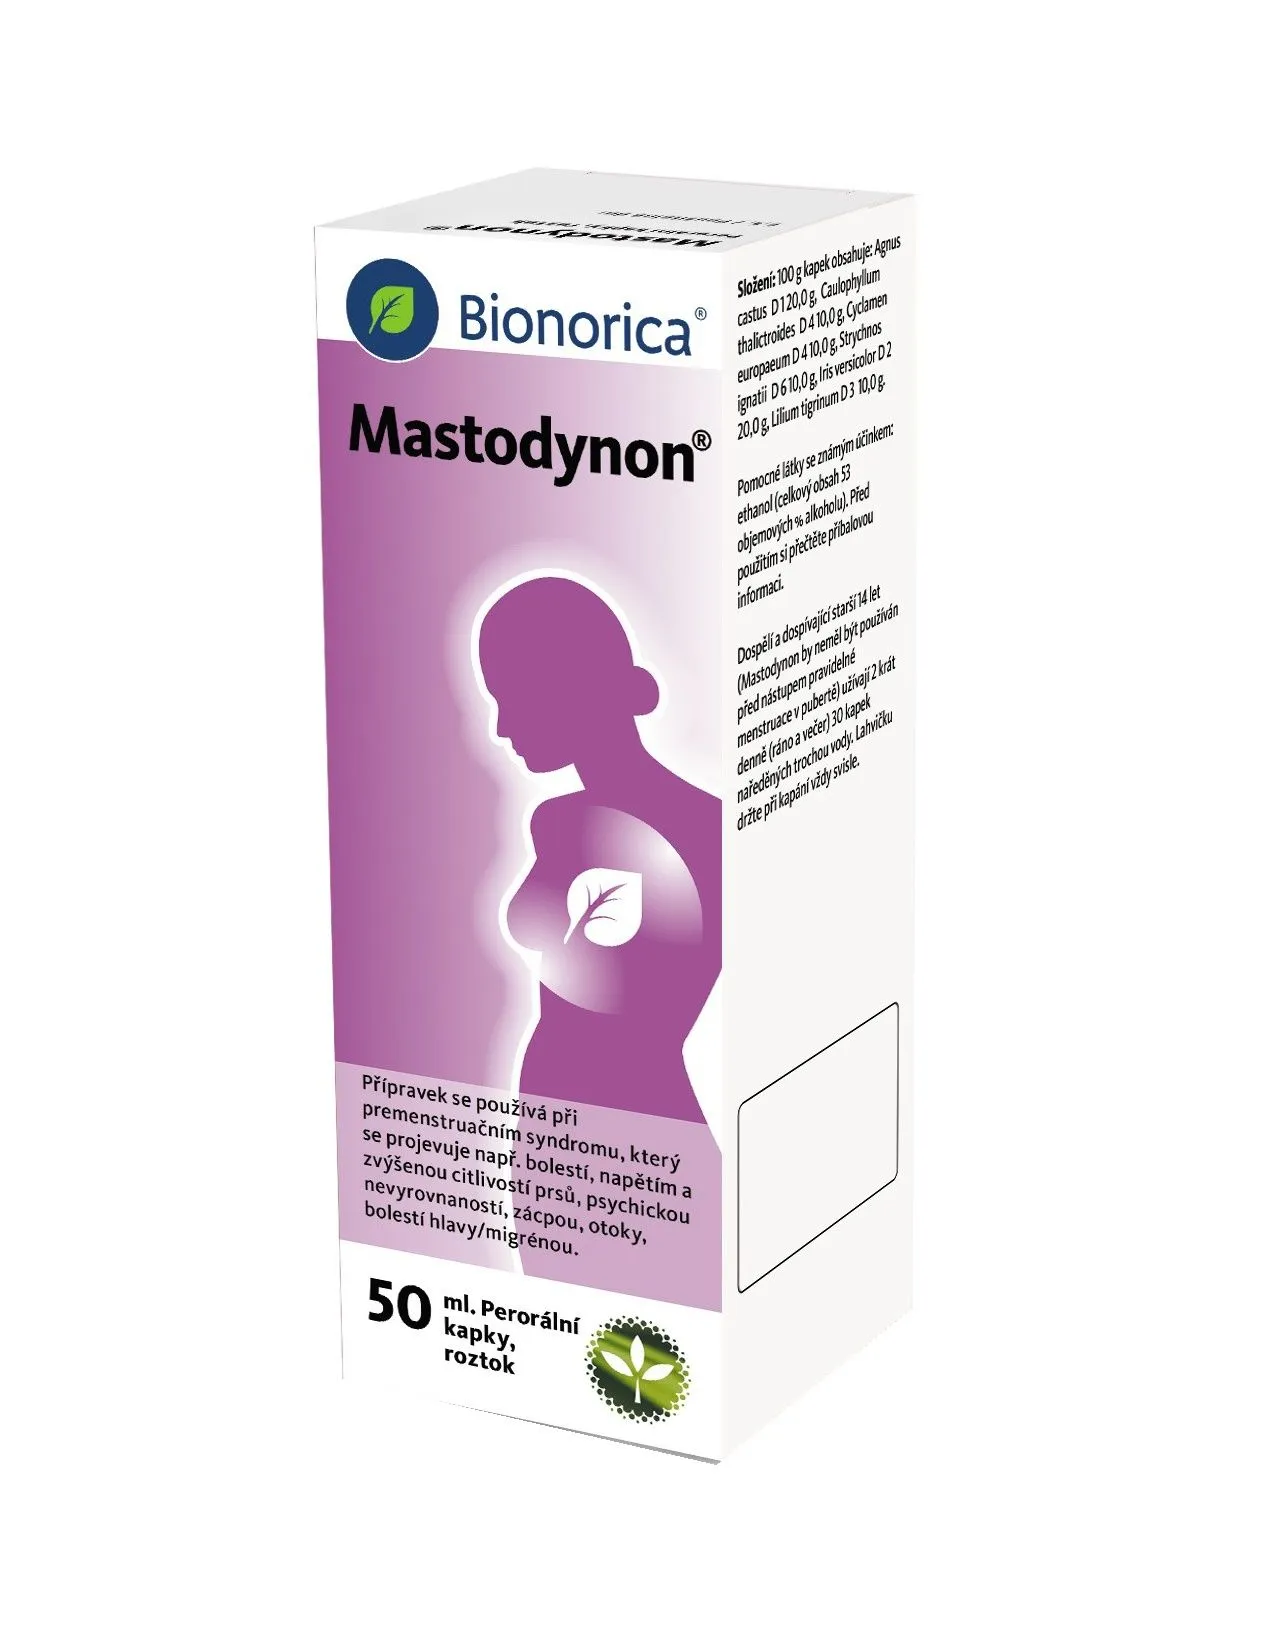 Bionorica Mastodynon